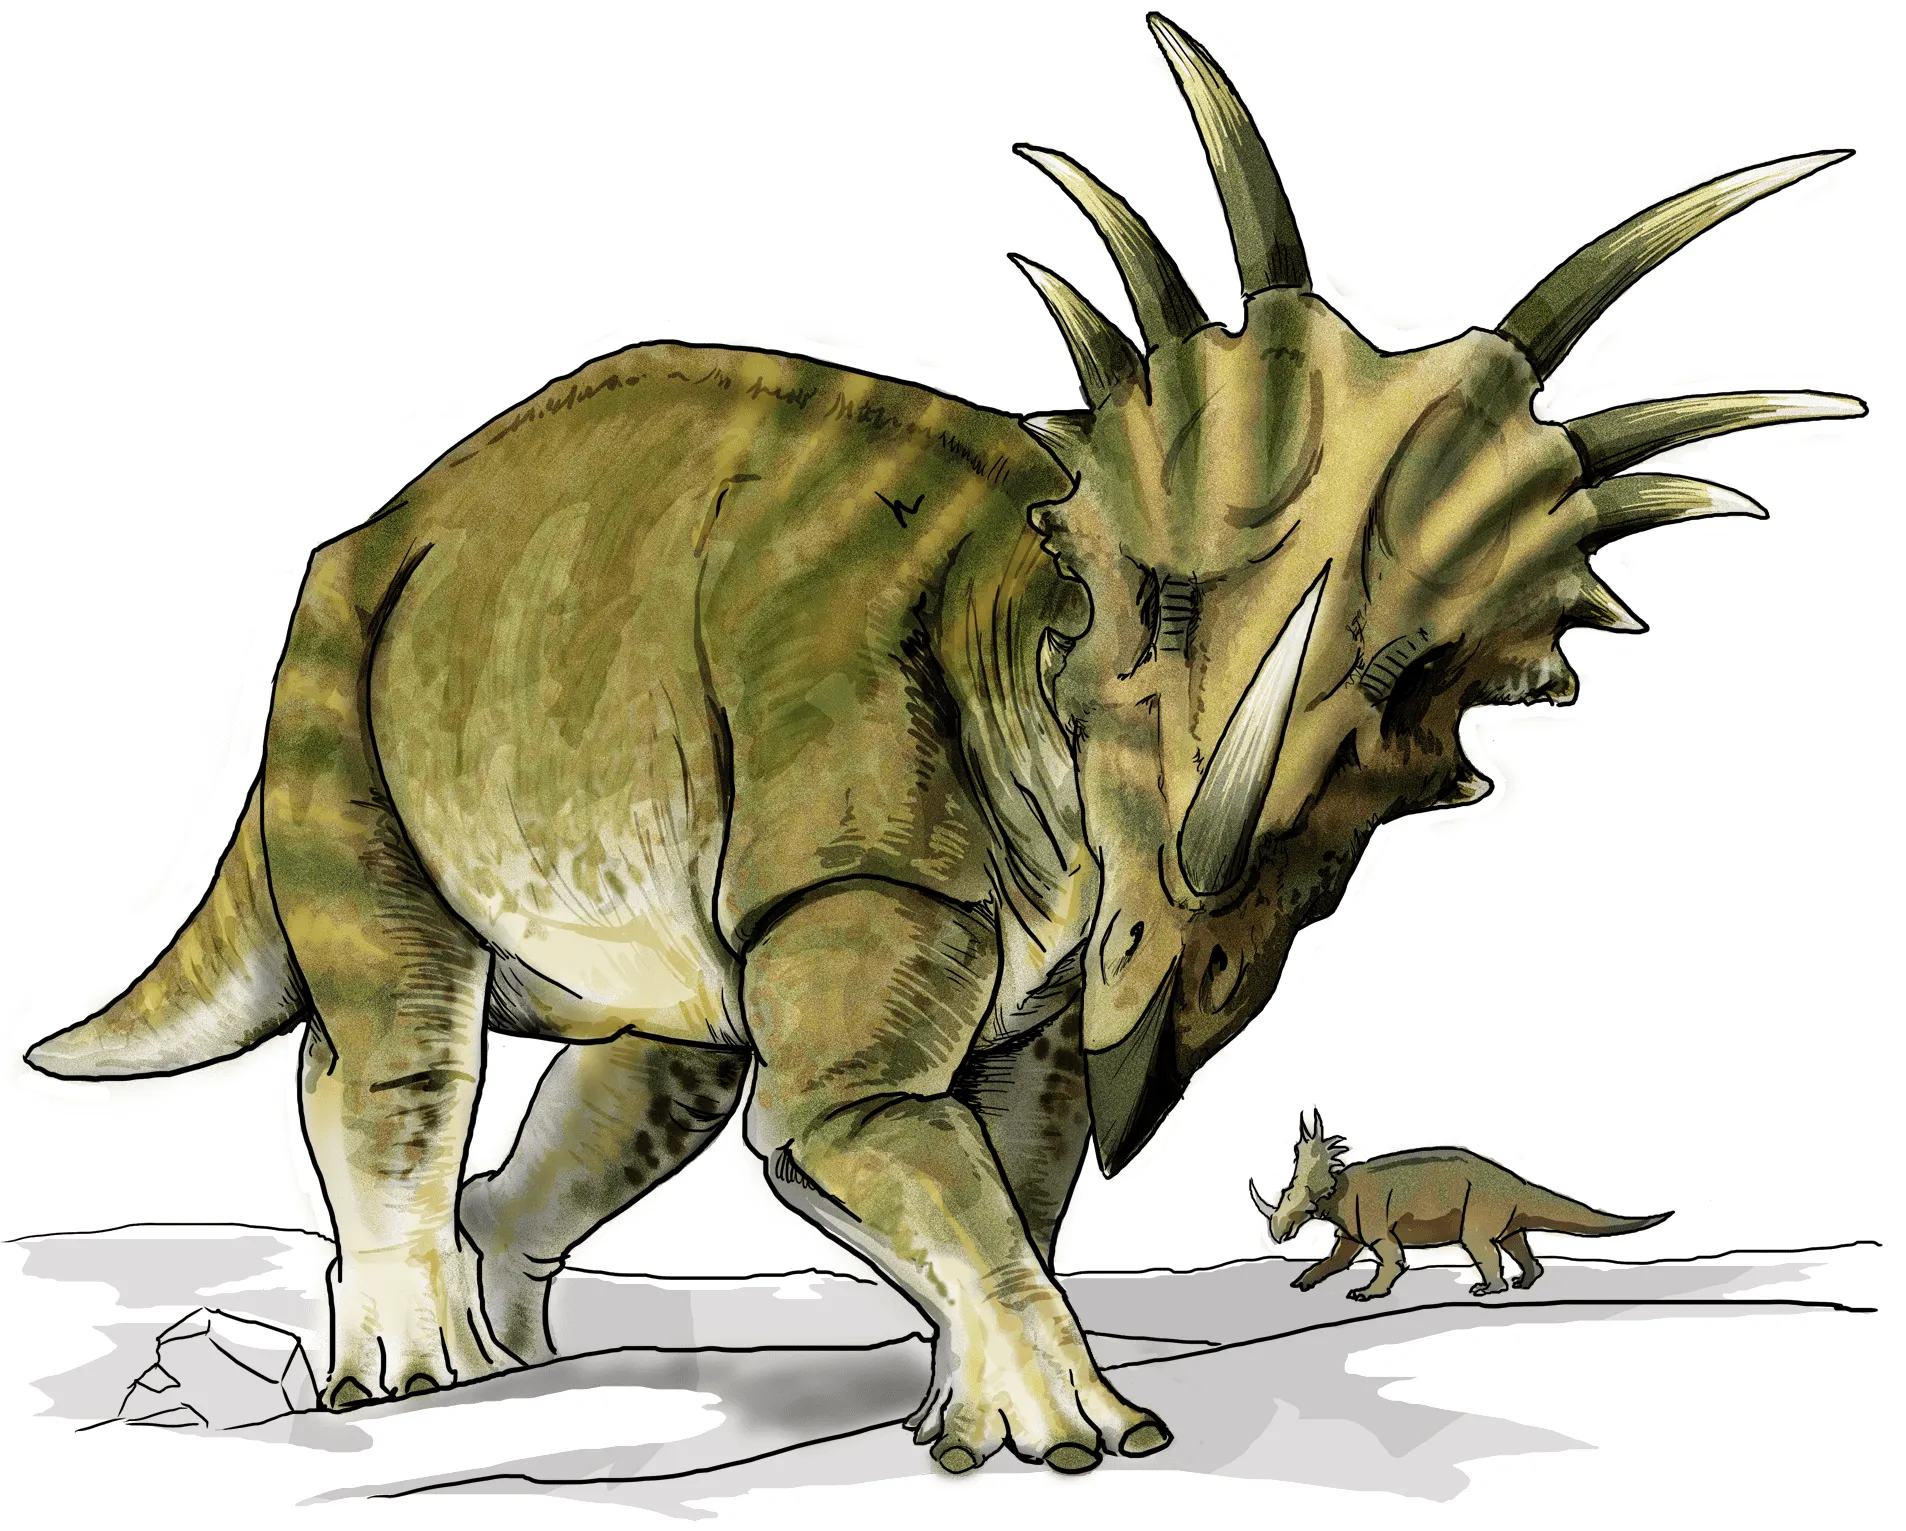 Xenoposeidons had long necks.